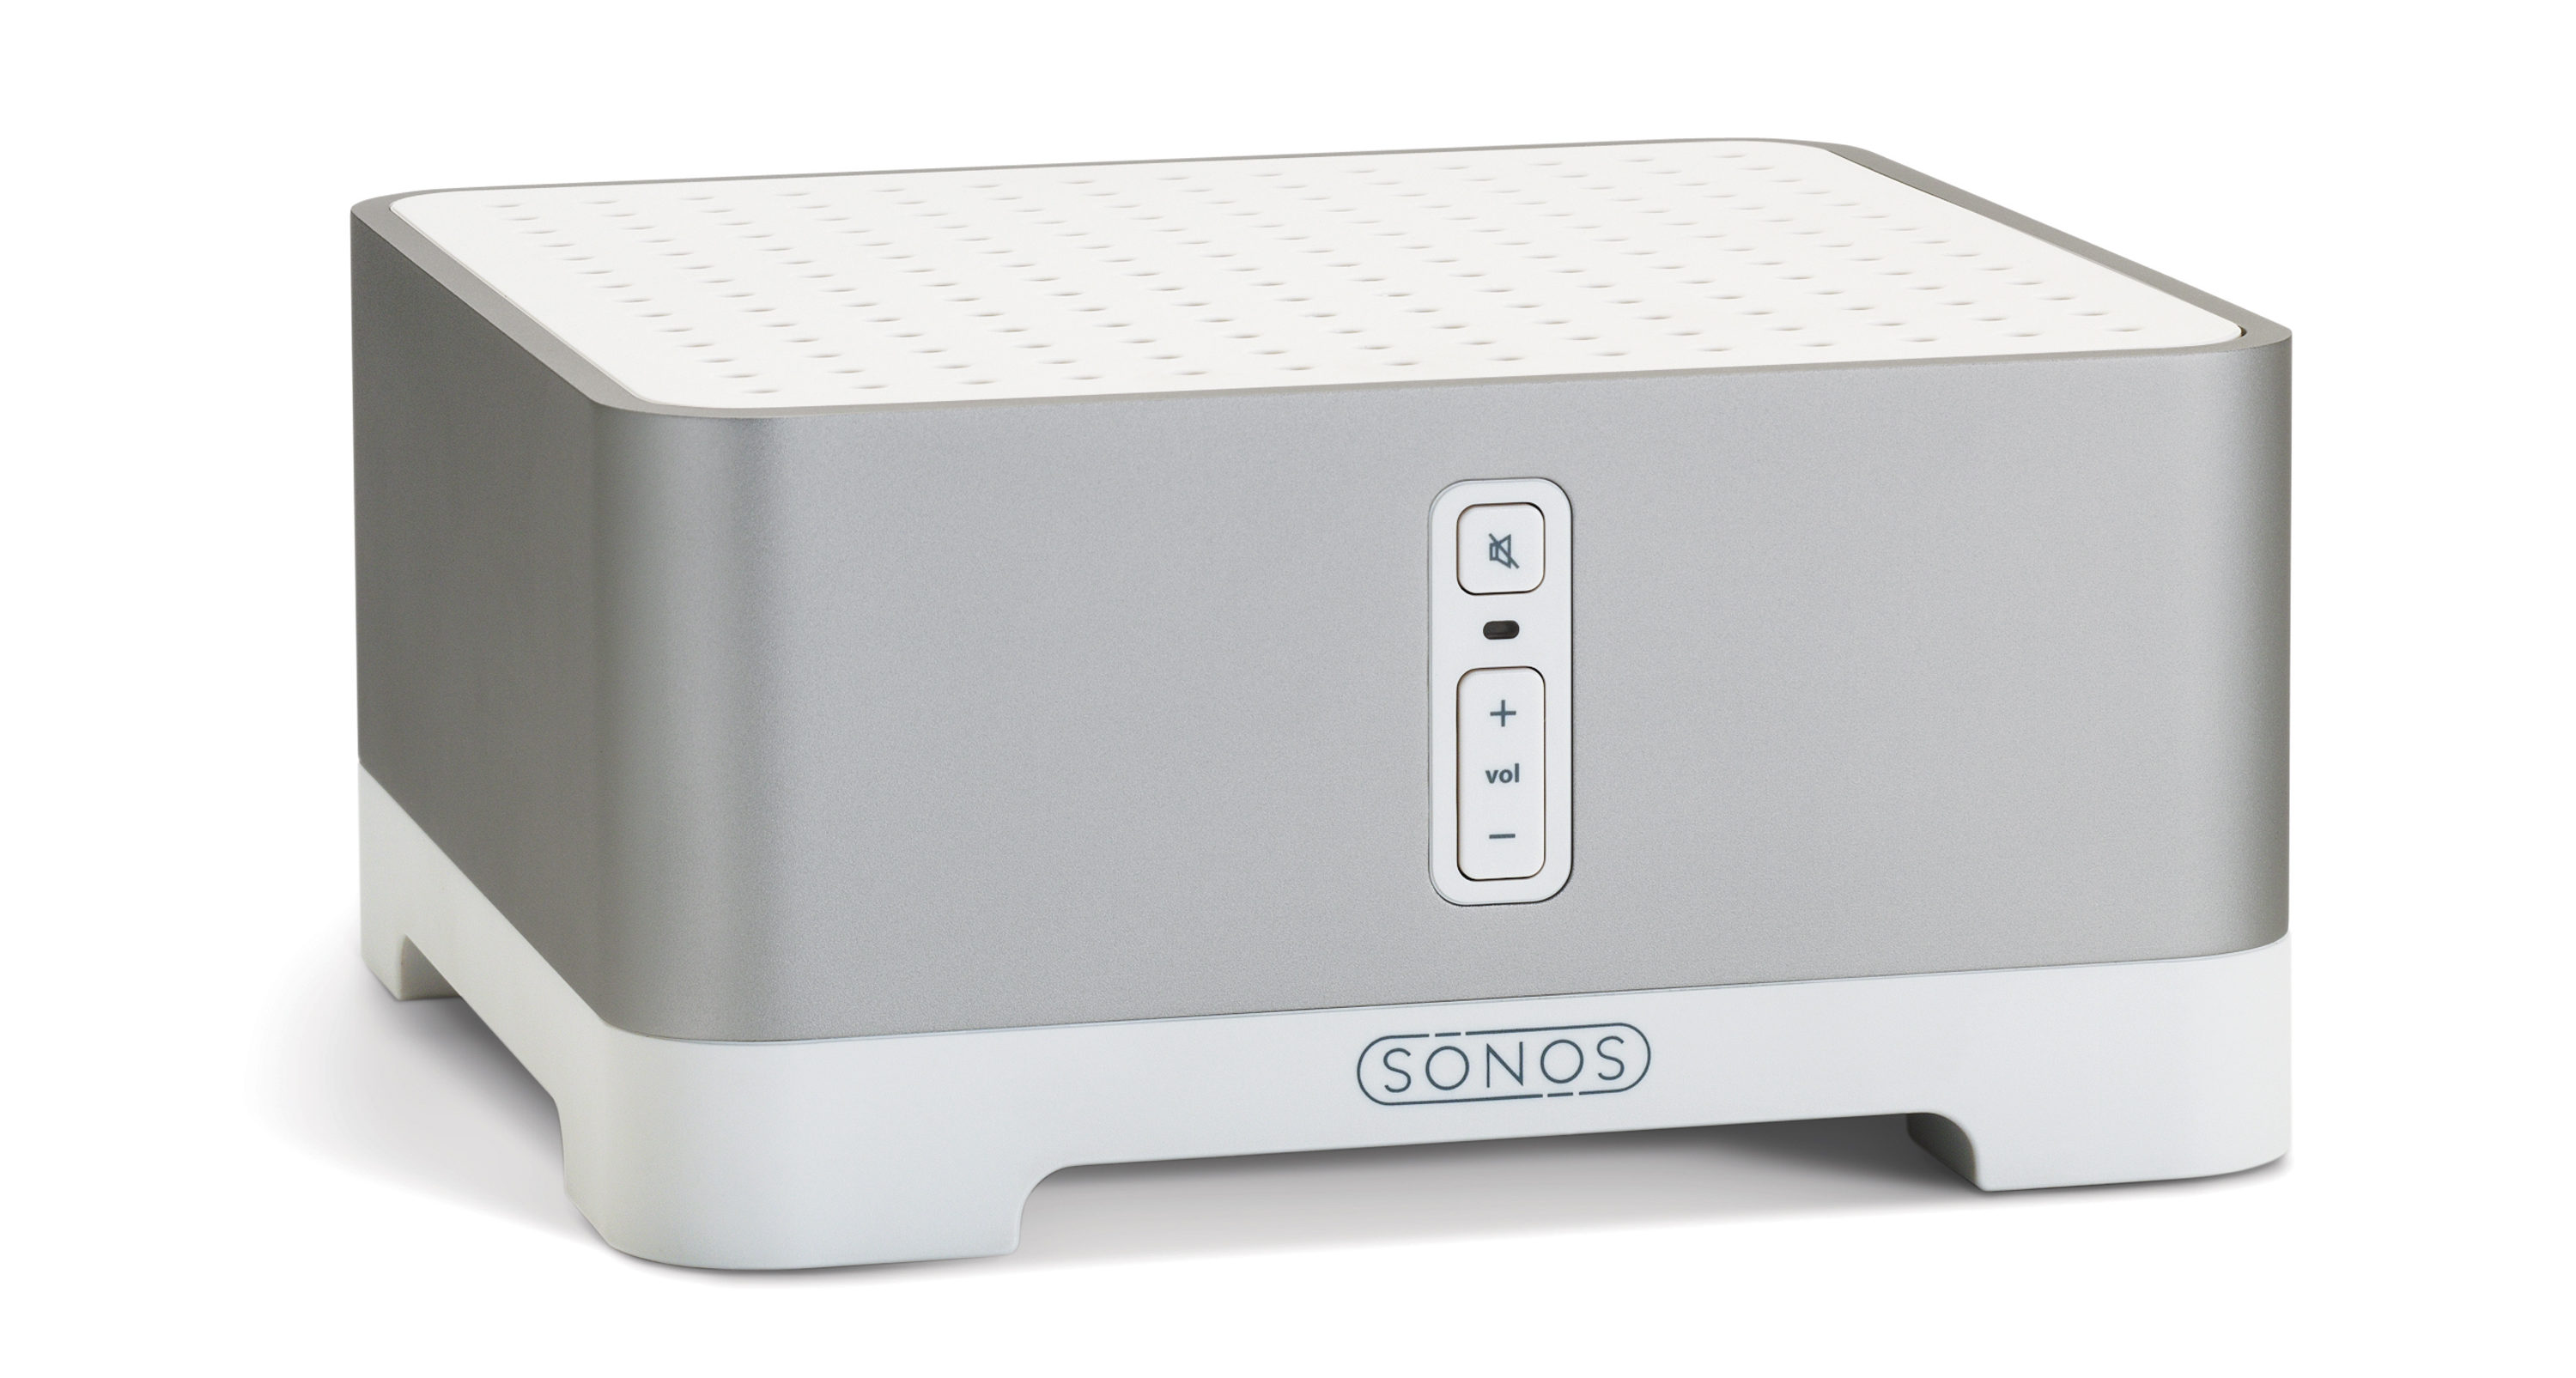 Sonos Design guidance and - EASYTEK